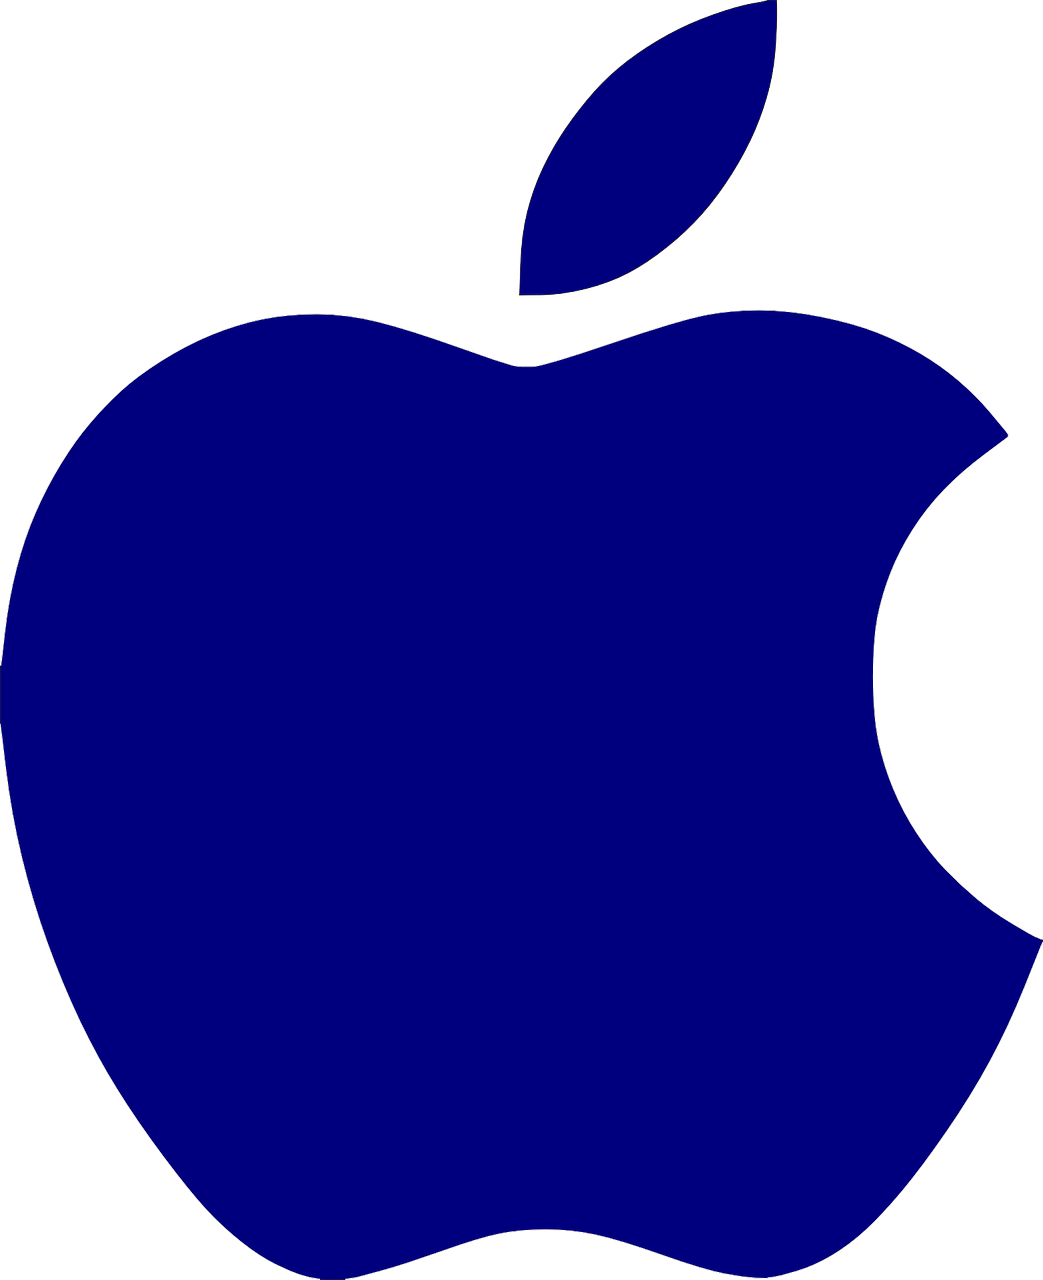 Apple,bite,blue,silhouette,icon - free image from needpix.com